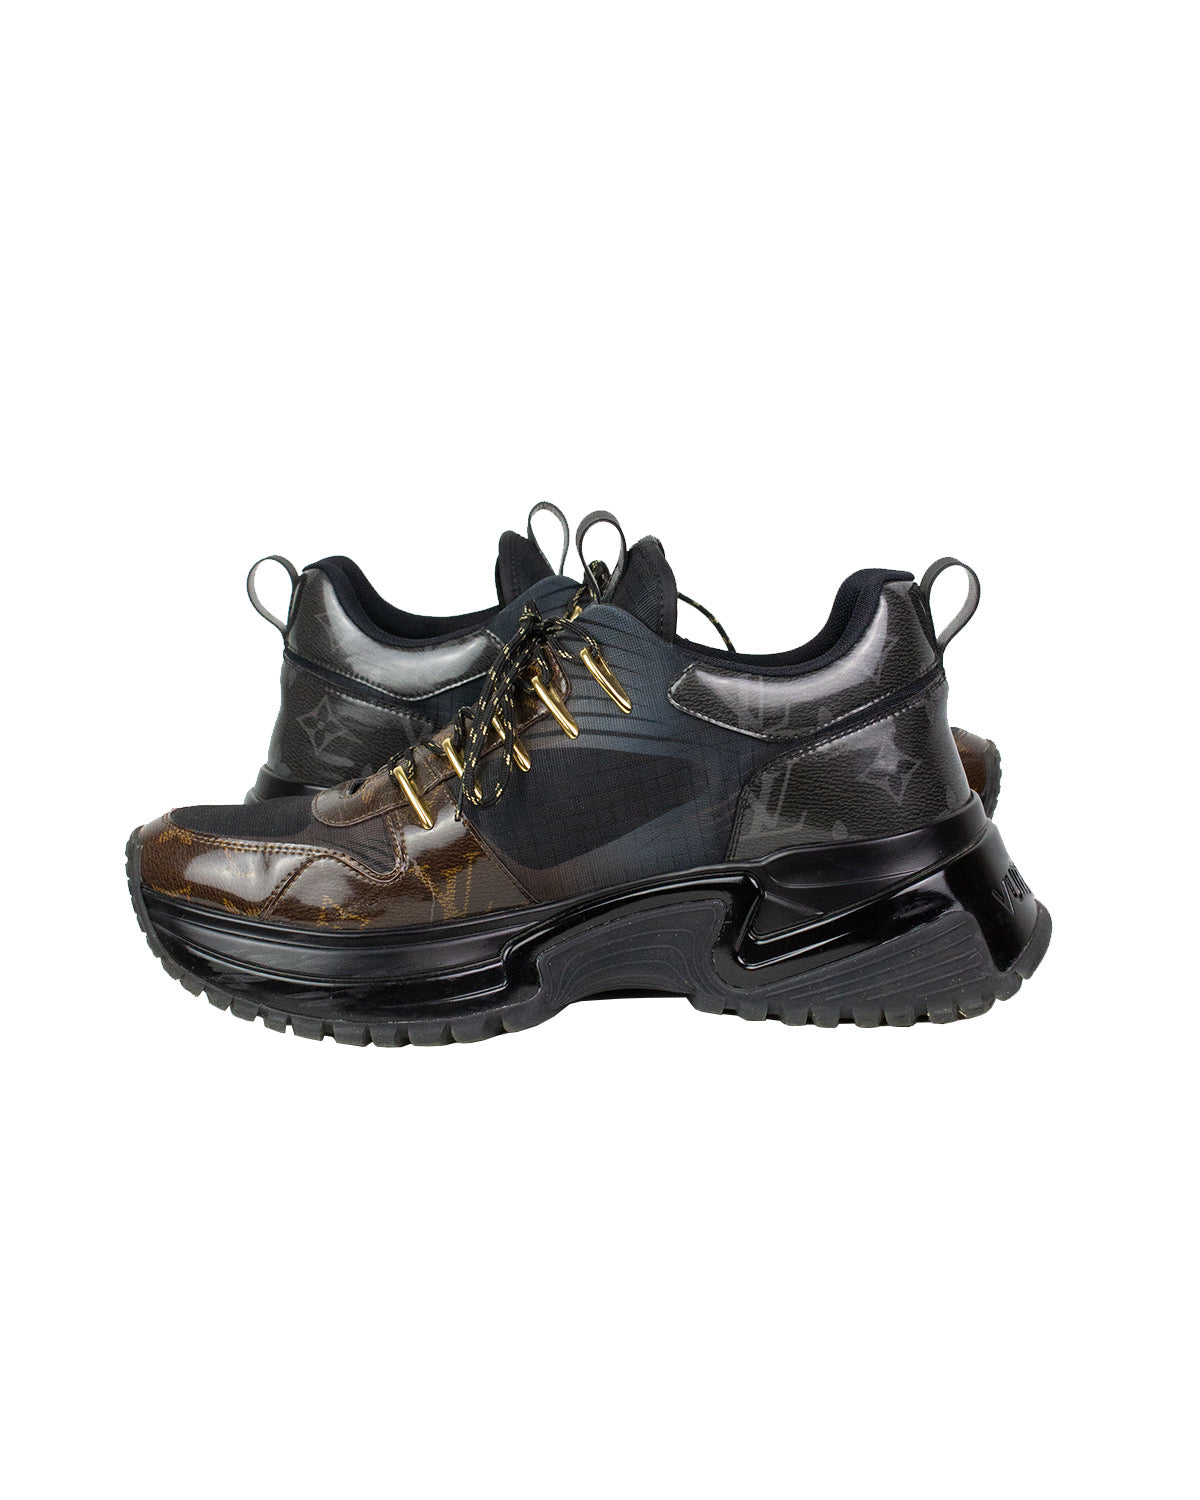 Louis Vuitton Python Leather Rare Run Away Pulse Line Sneaker Size